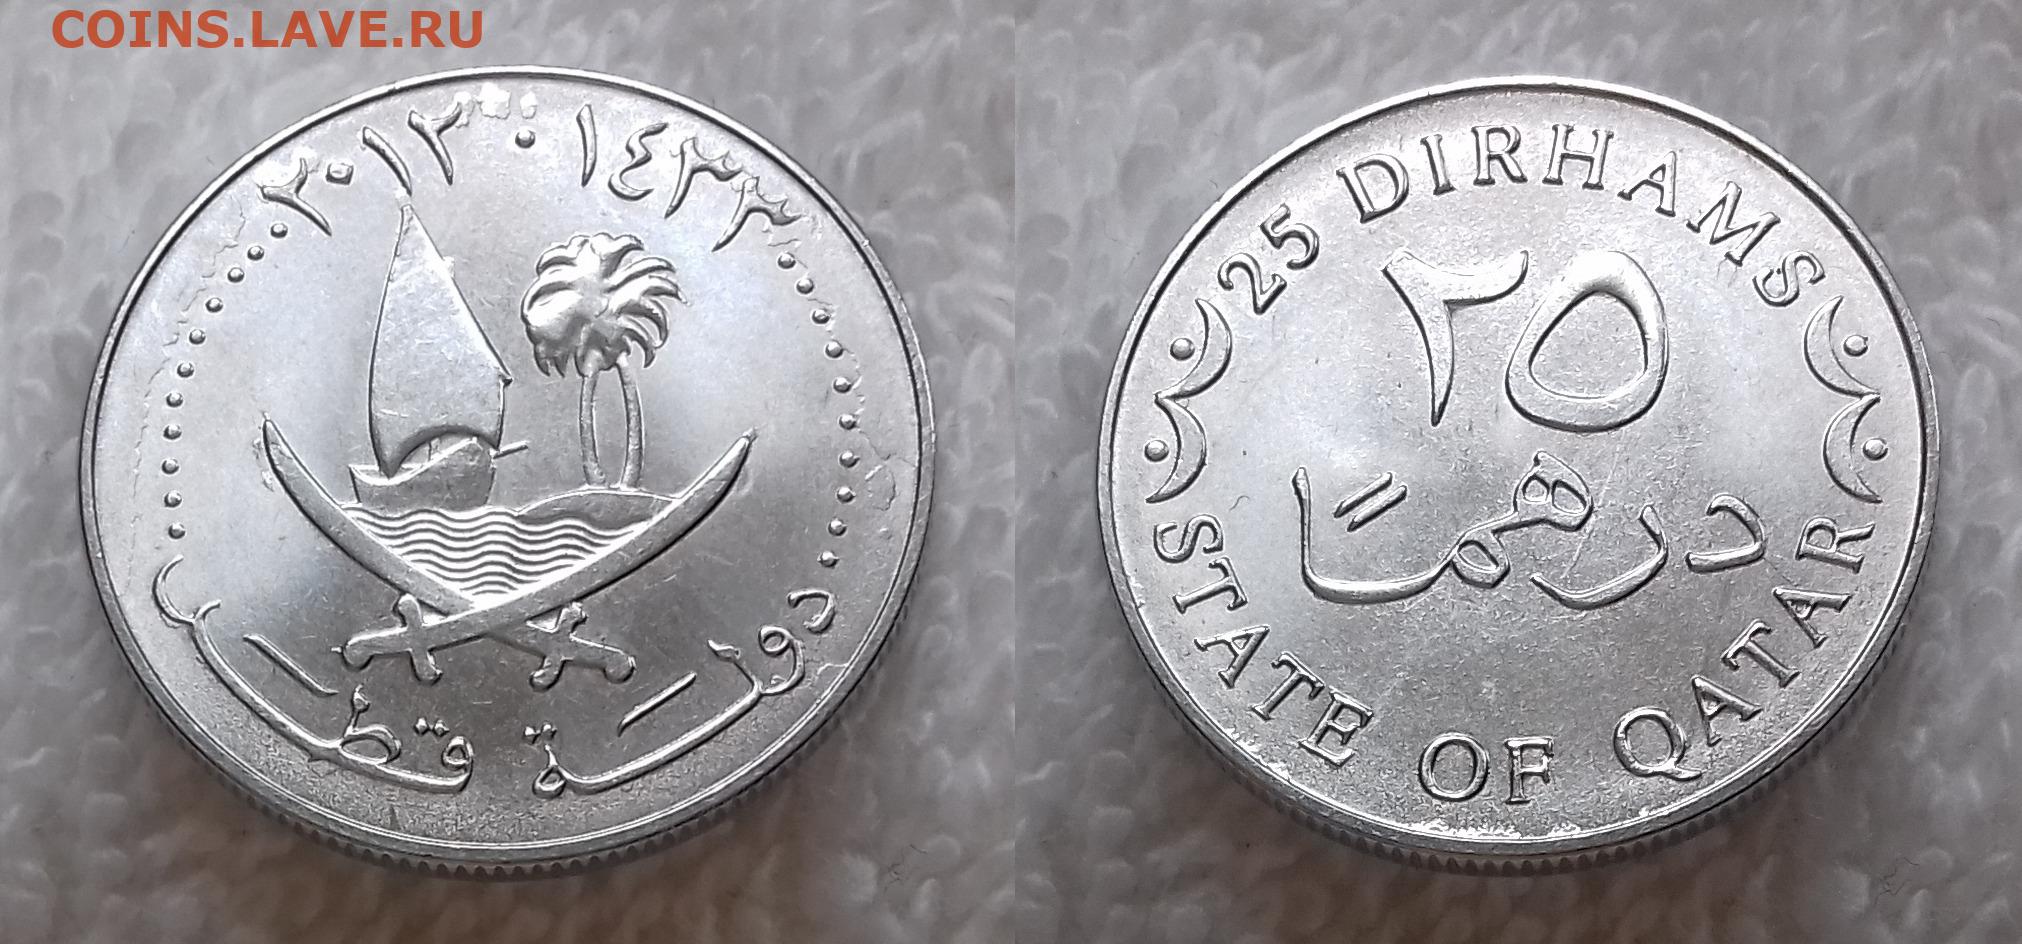 19 дирхам. 25 Дирхамов. Дирхама монета 25. ОАЭ 1 дирхам 1986. Монета Катар 2 дирхама.